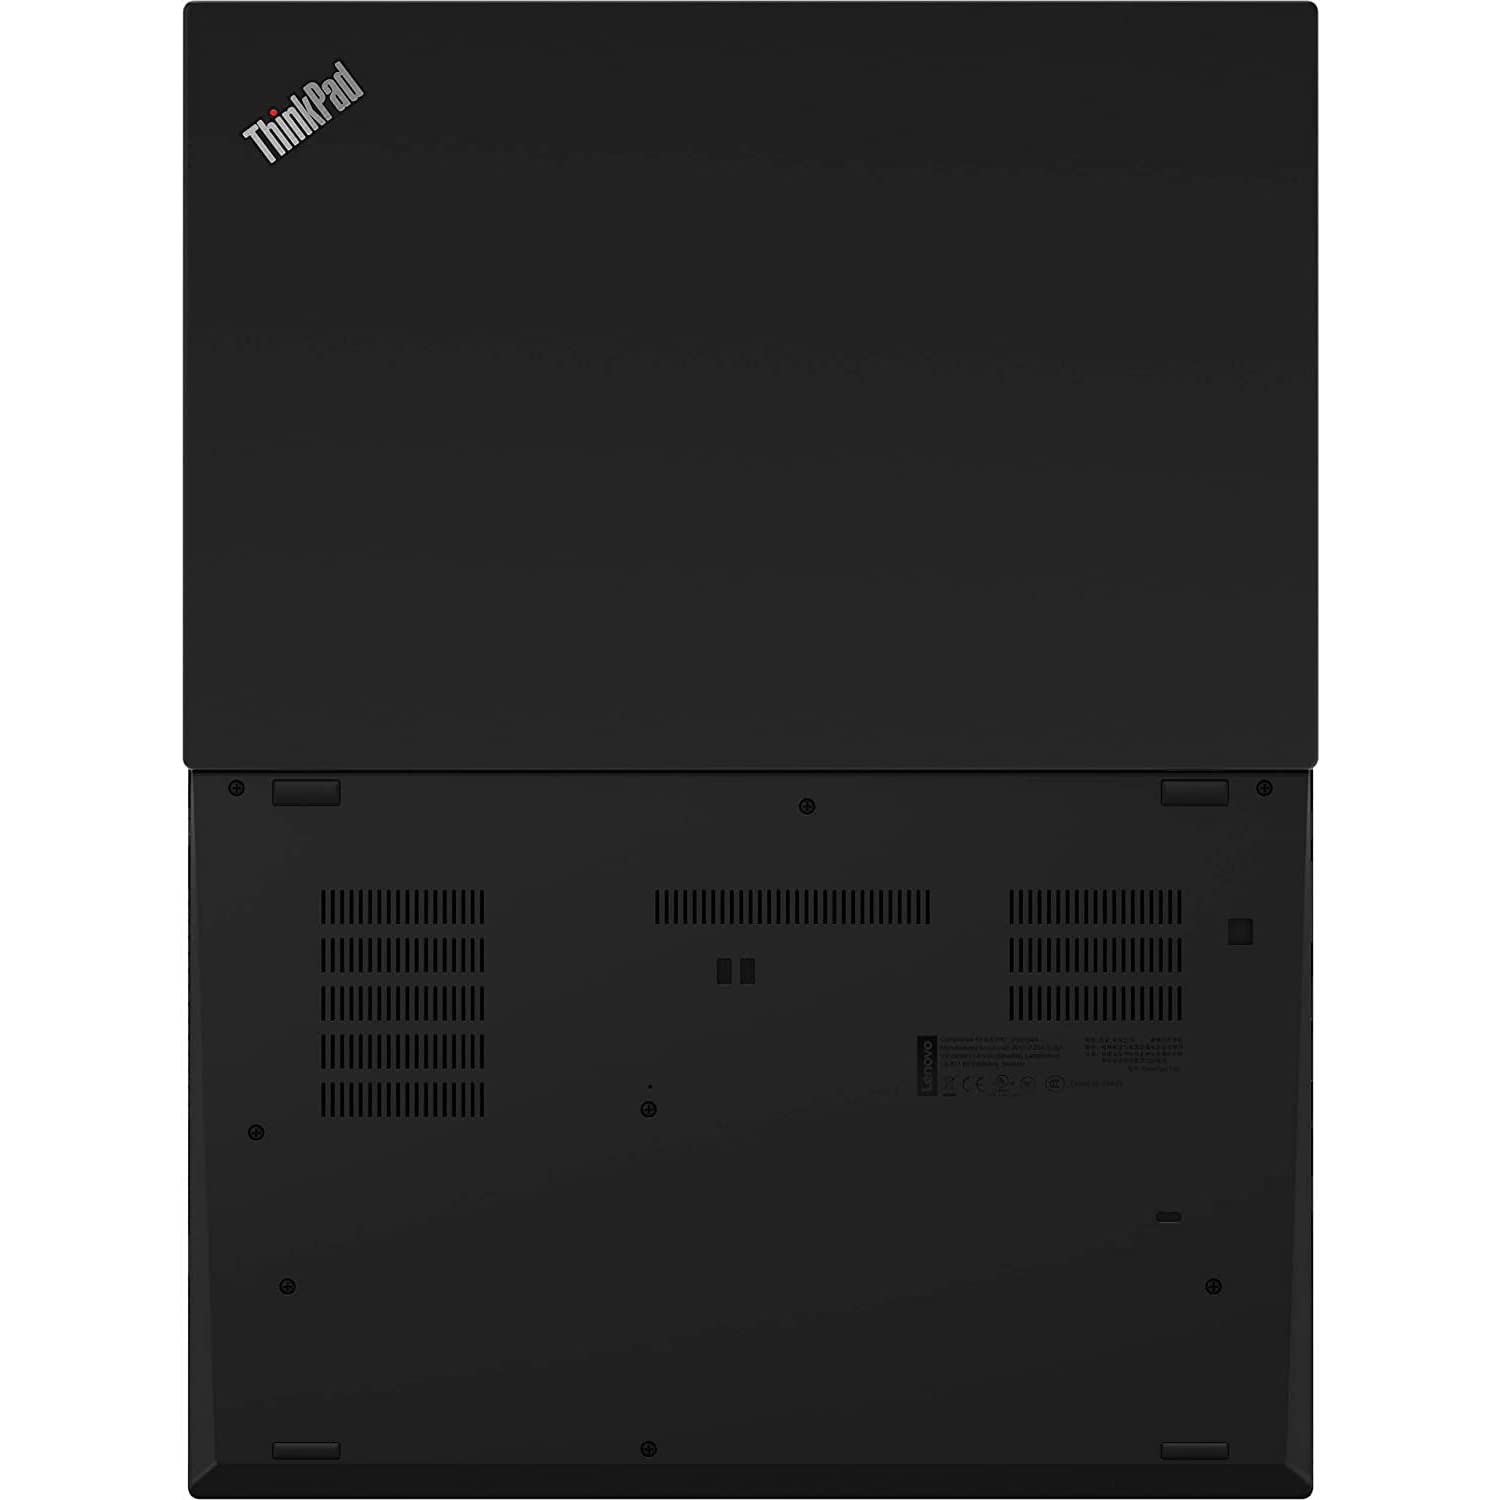 Lenovo ThinkPad T15 Gen 2 15.6" FHD Business Laptop Computer, Intel Core i7-1165G7 up to 4.7GHz, 16GB DDR4 RAM, 1TB PCIe SSD, WiFi 6E, Bluetooth 5.1, Thunderbolt 4, Windows 10 Pro